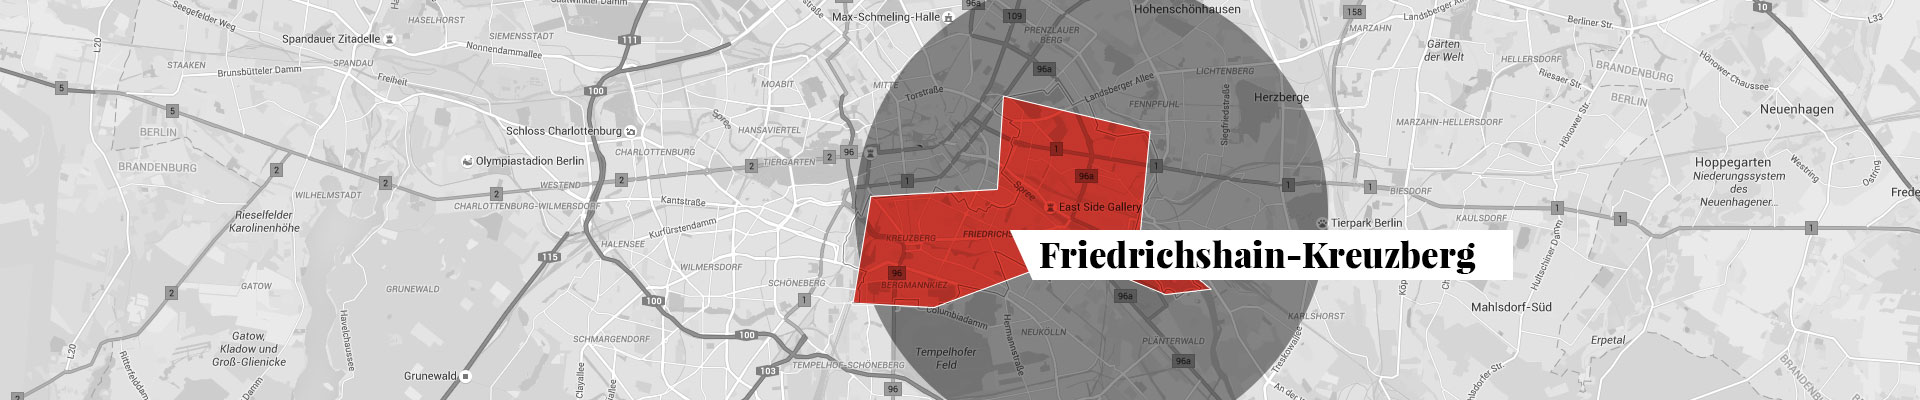 Friedrichshain-Kreuzberg plan